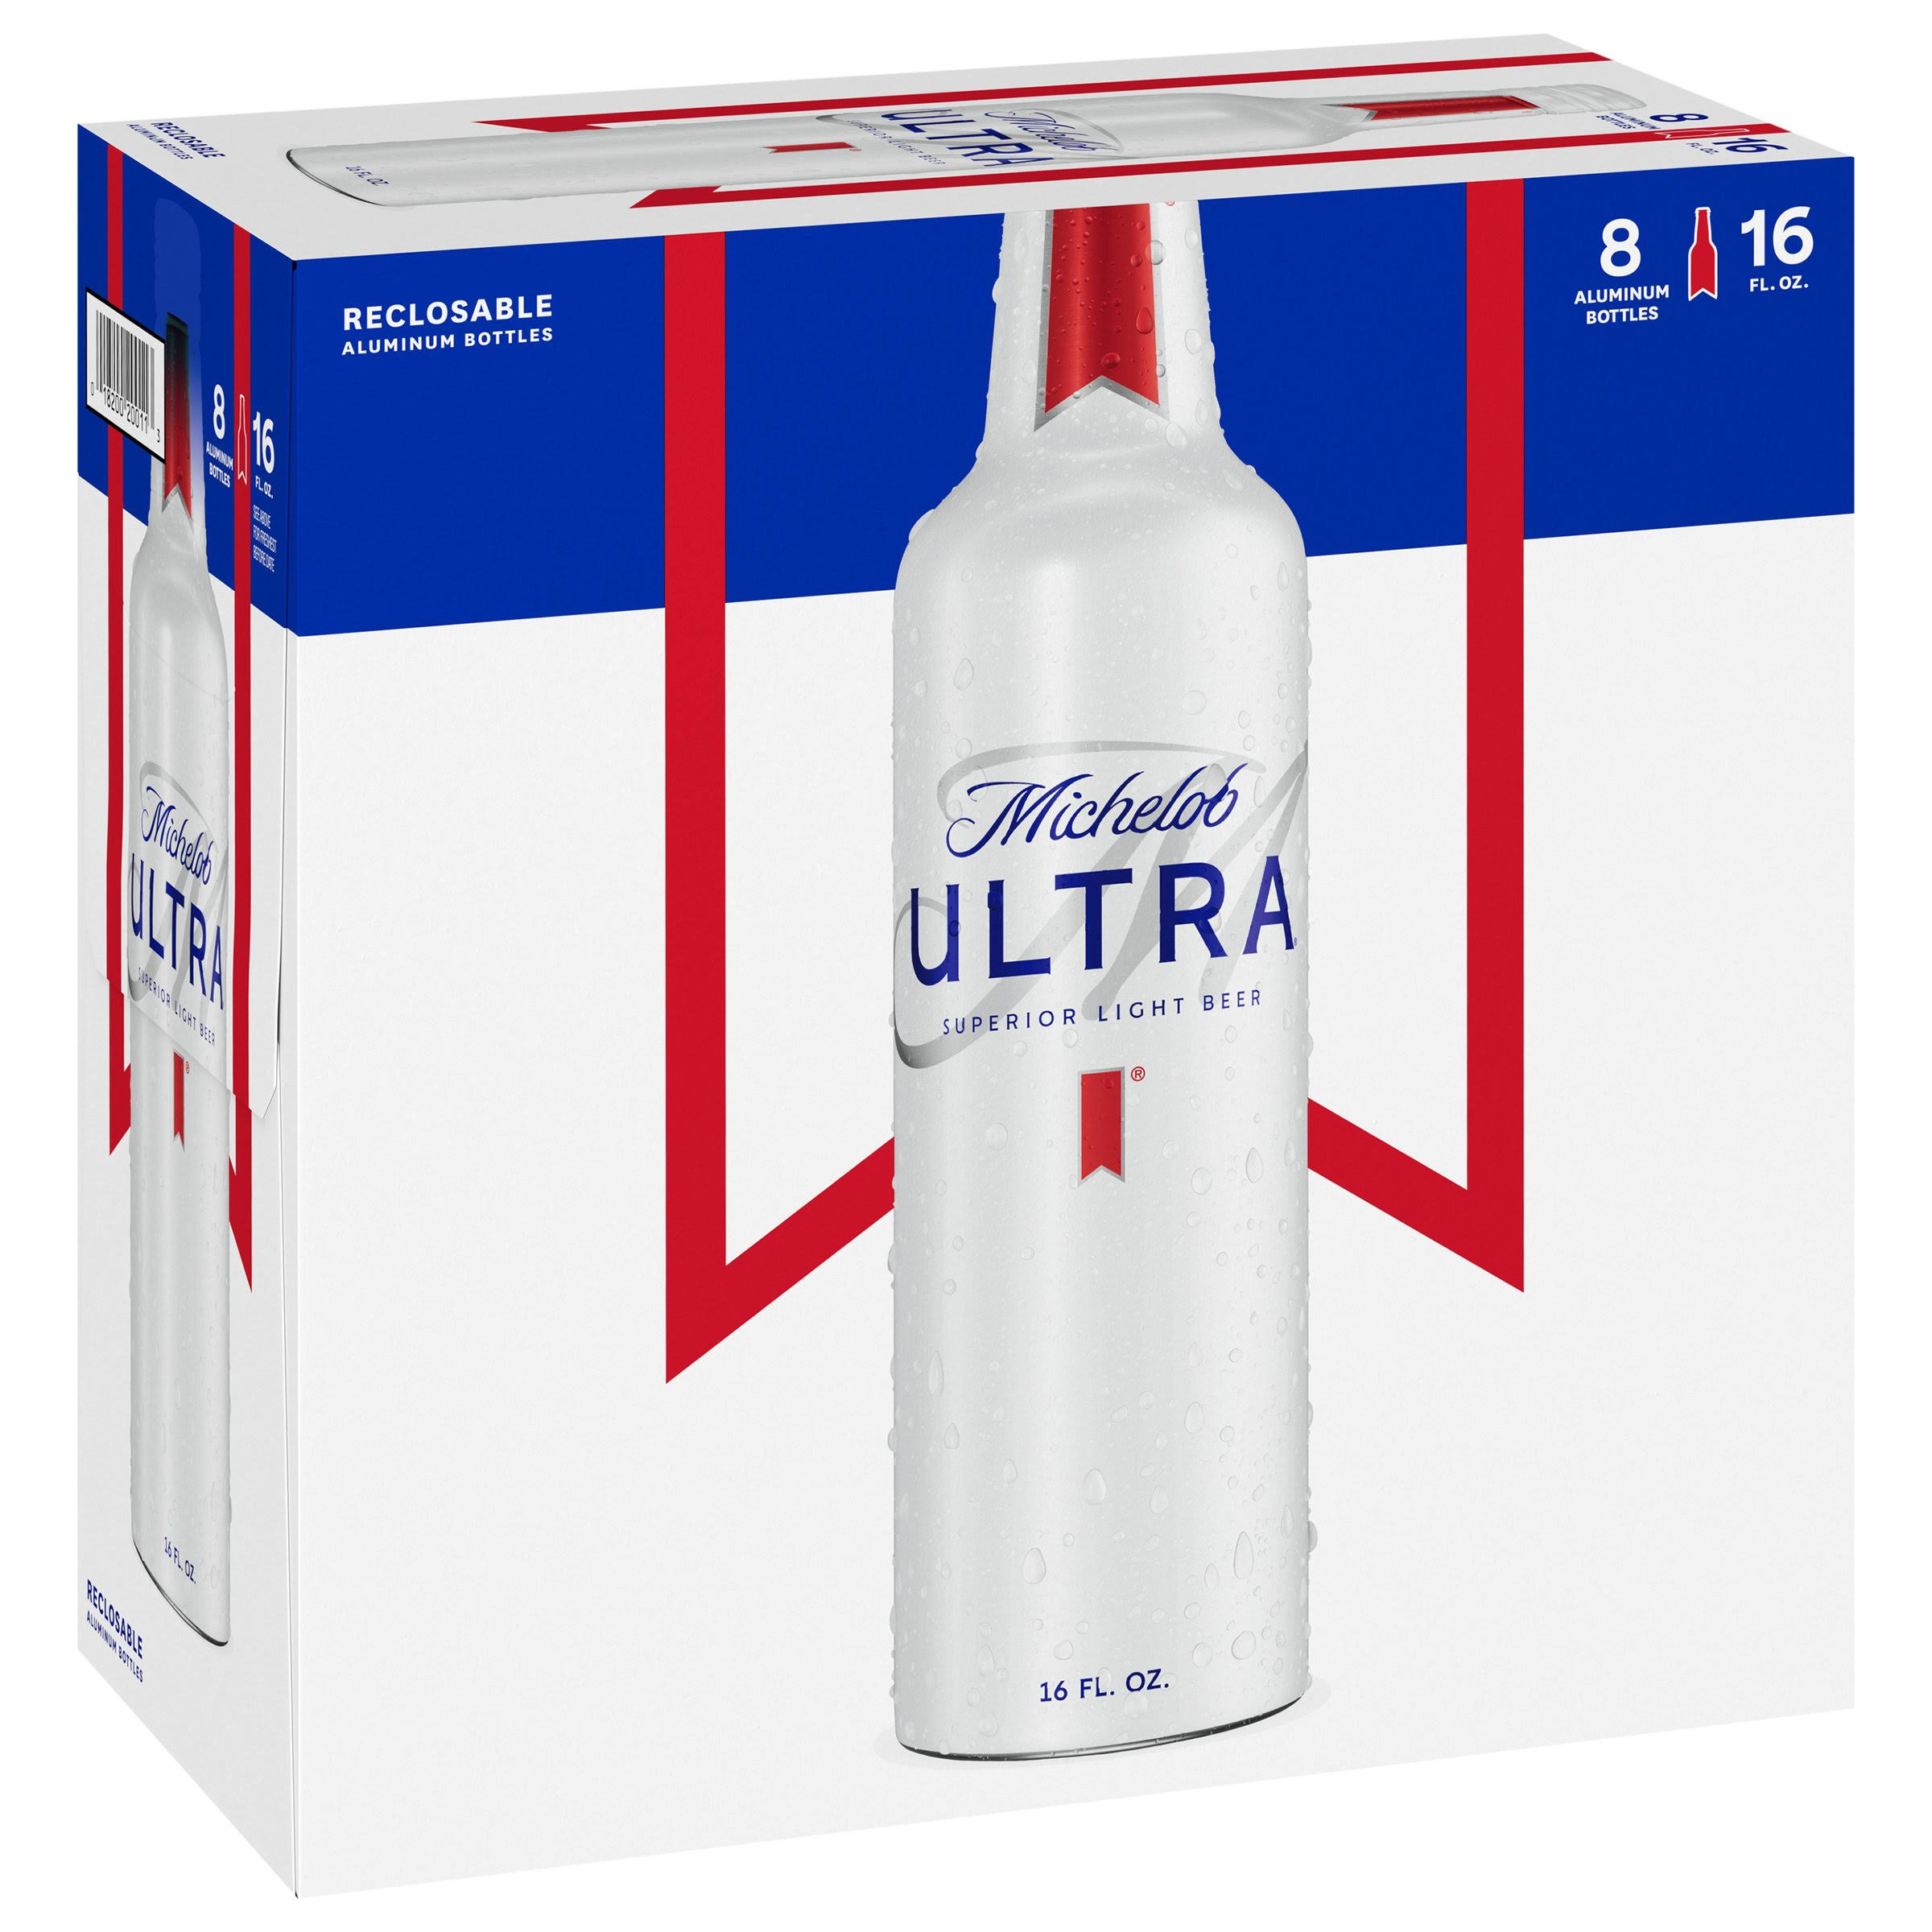 Michelob Ultra Superior Light Beer - 16 fl oz, x8